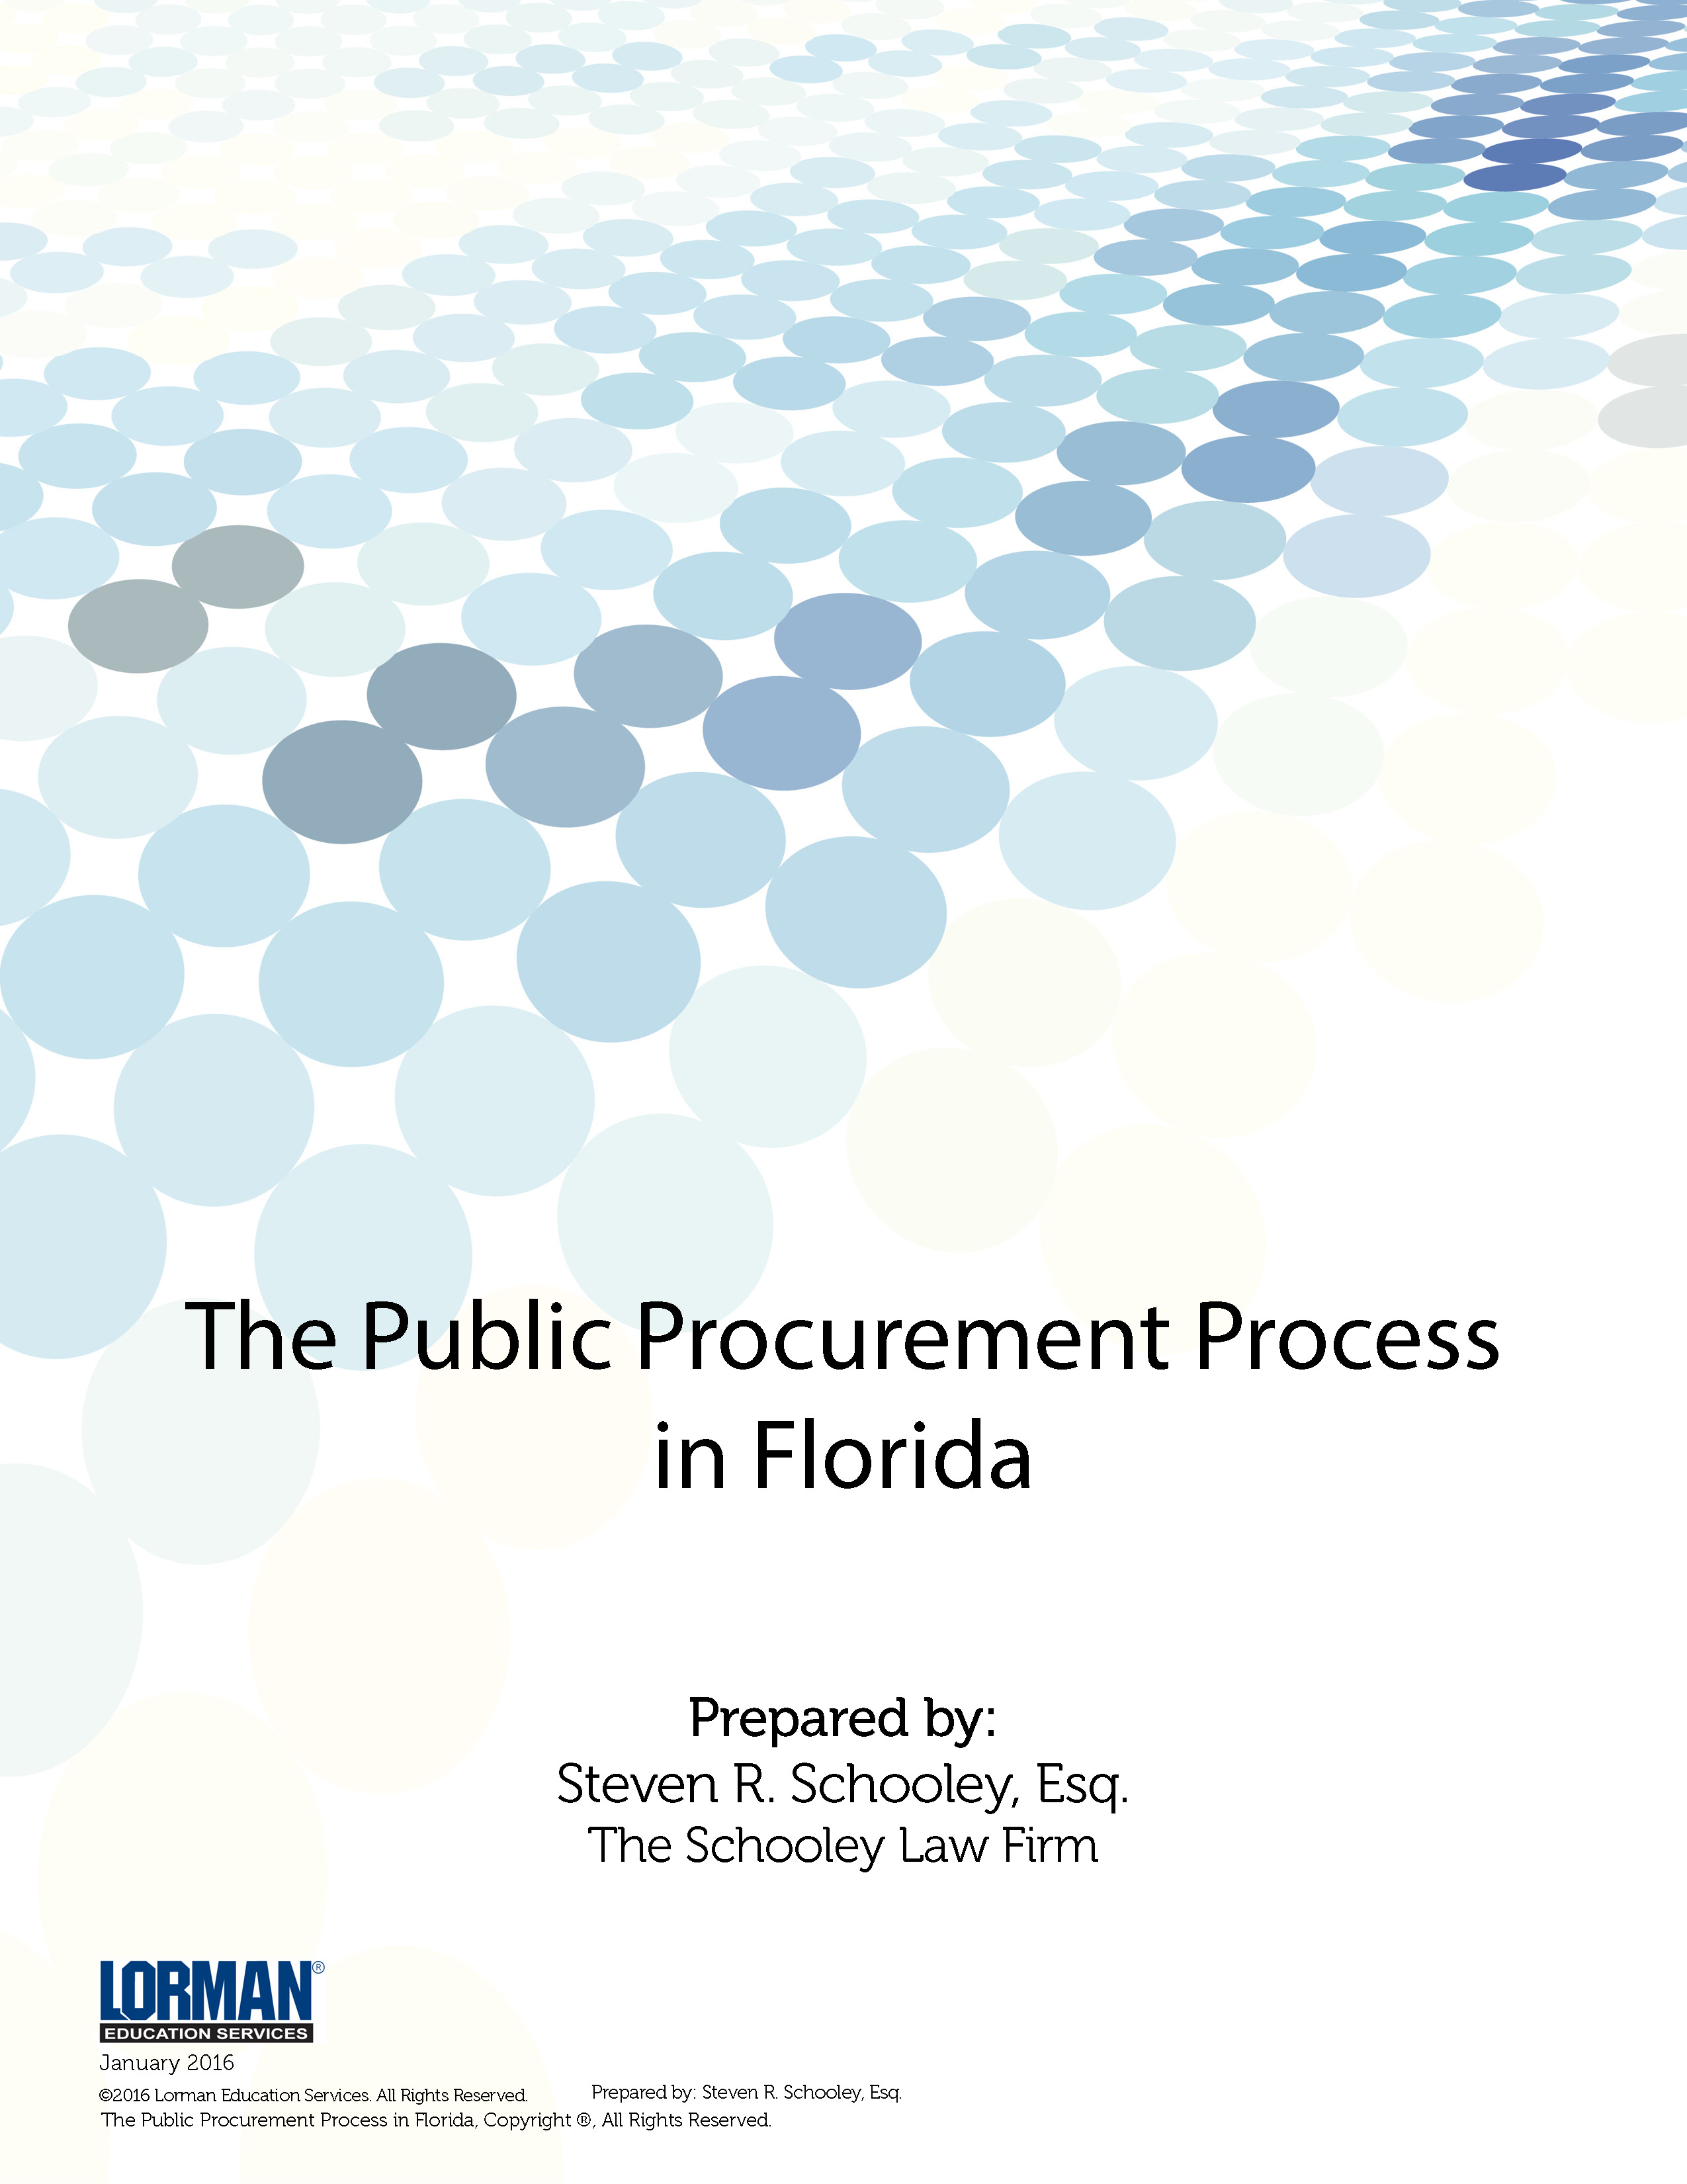 The Public Procurement Process in Florida